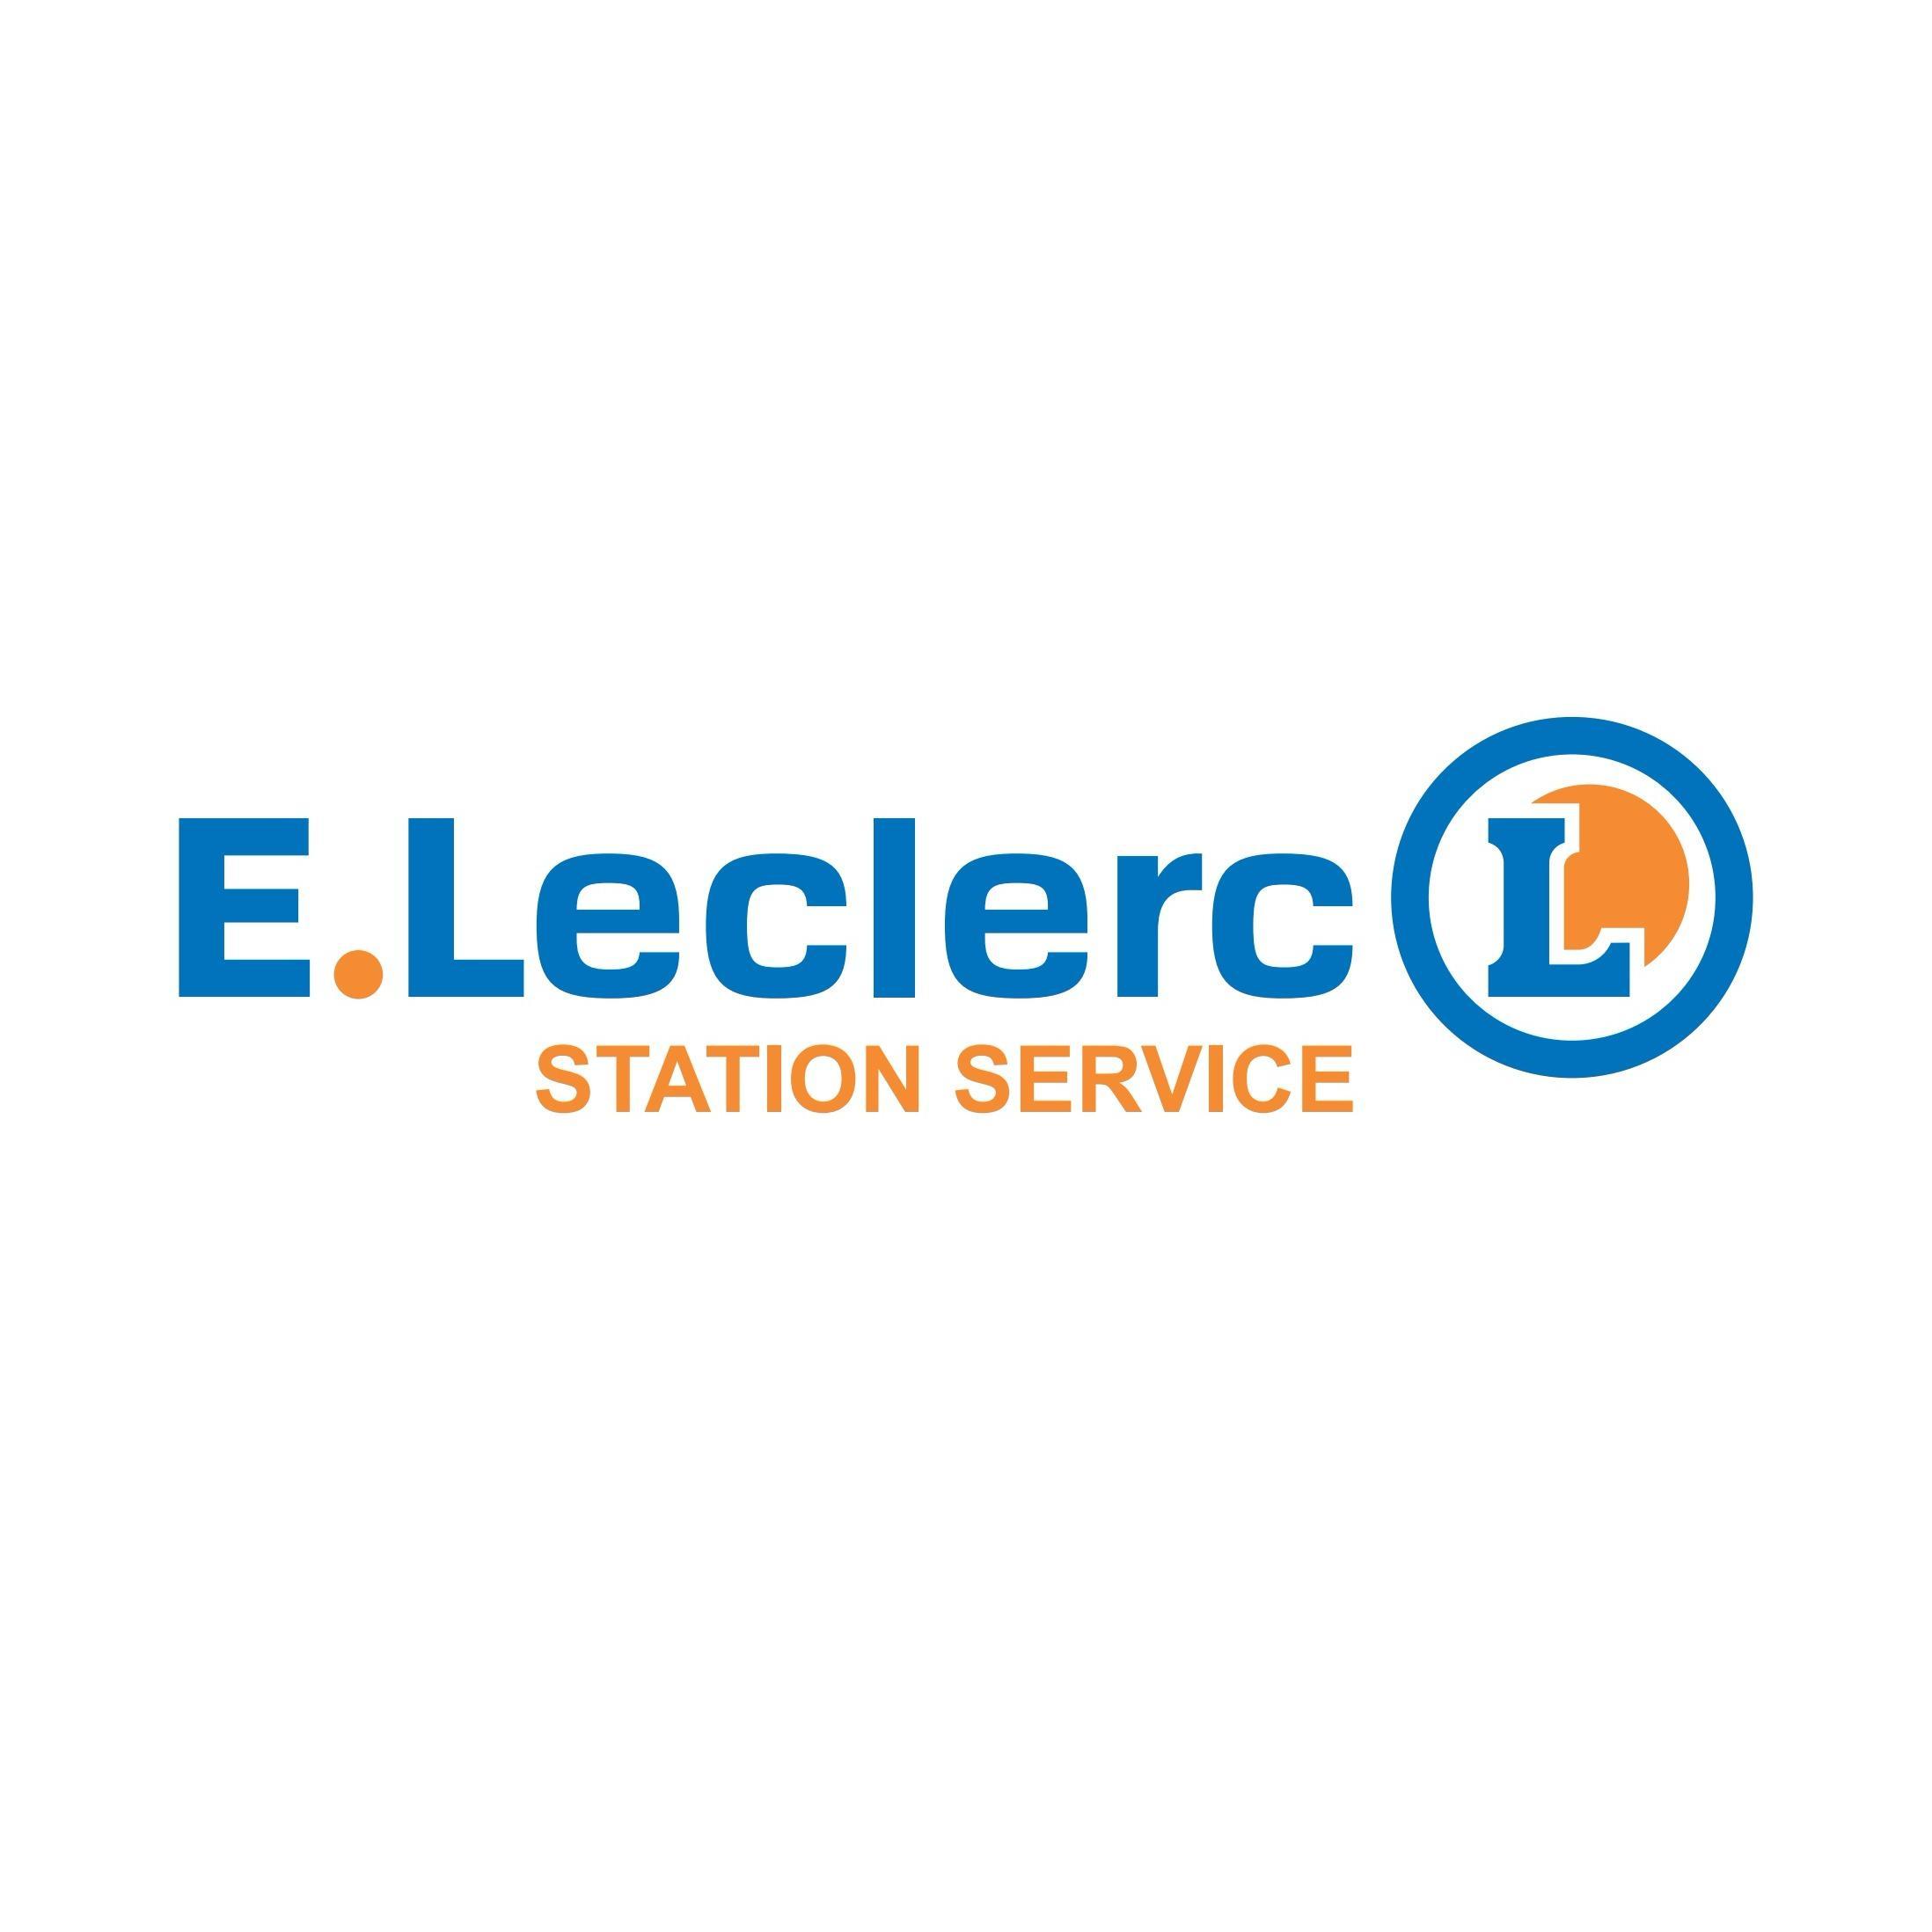 E.leclerc Station Service Vernon